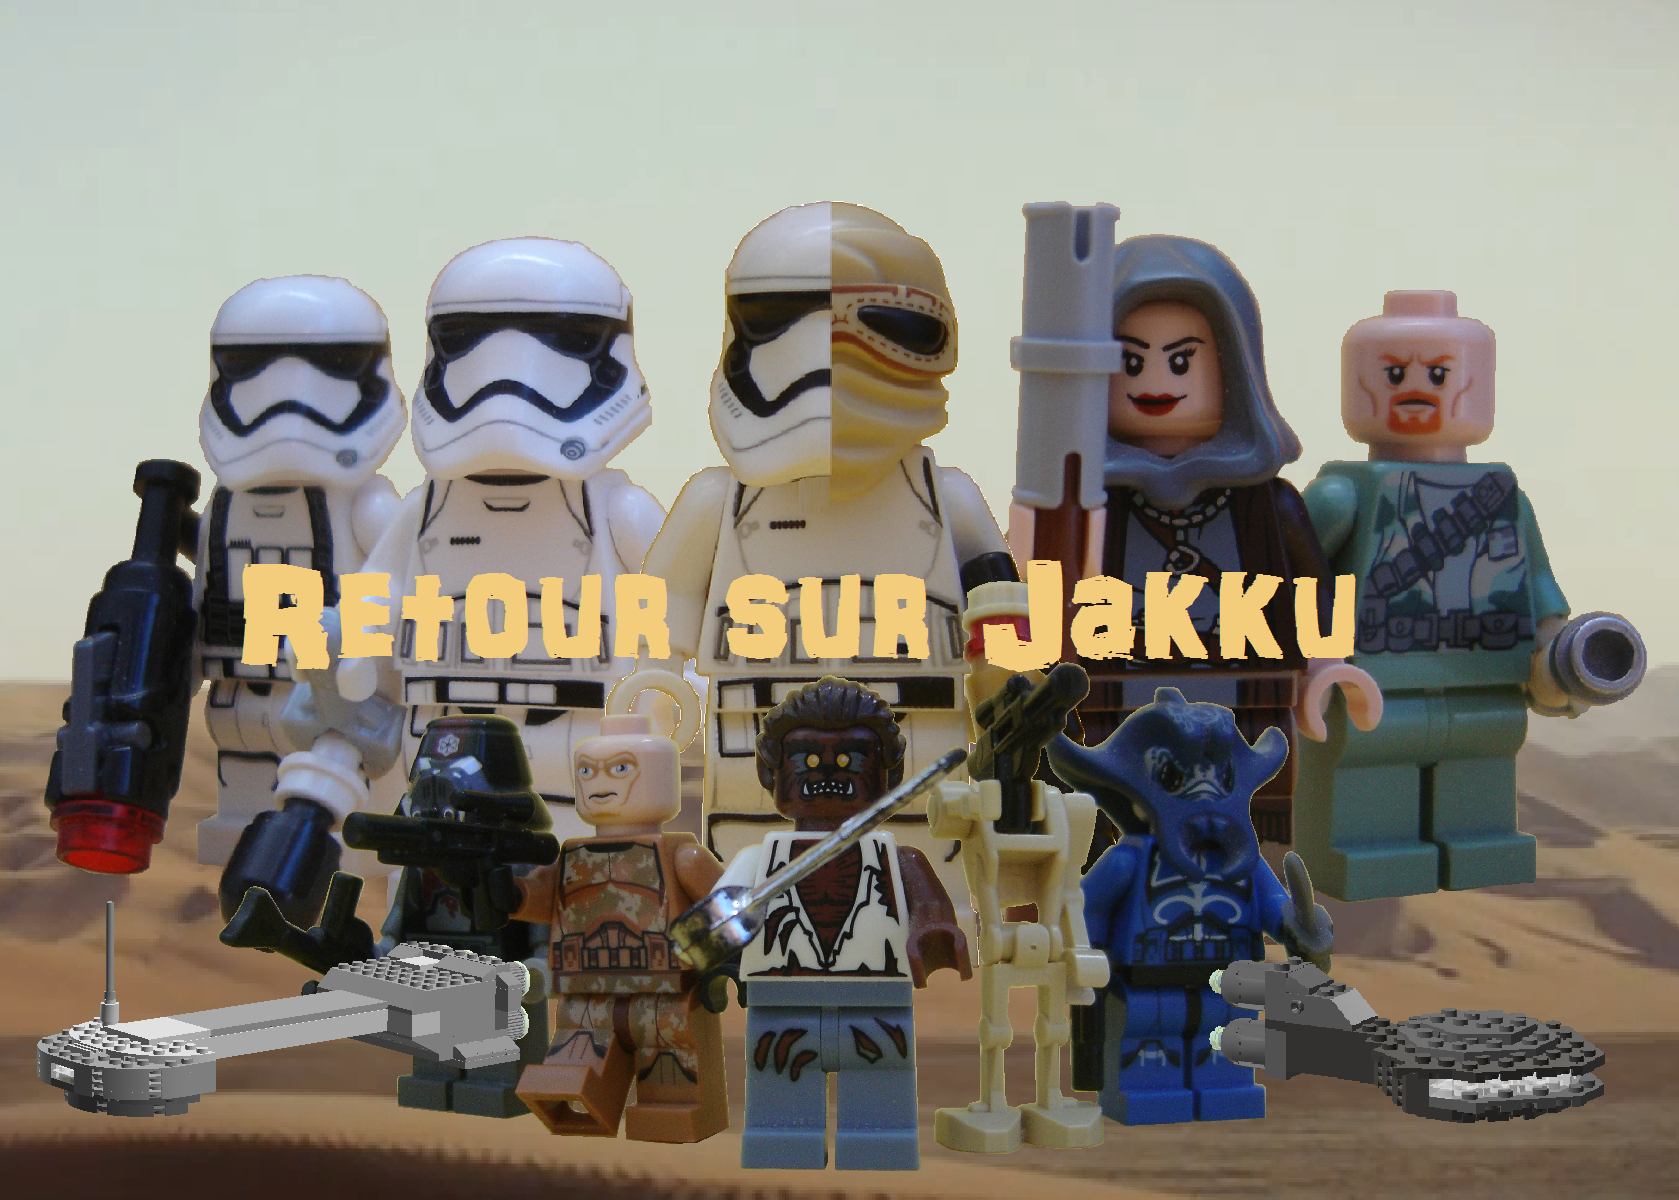 Stormtrooper Brickfilm E2S2 - Retour sur Jakku